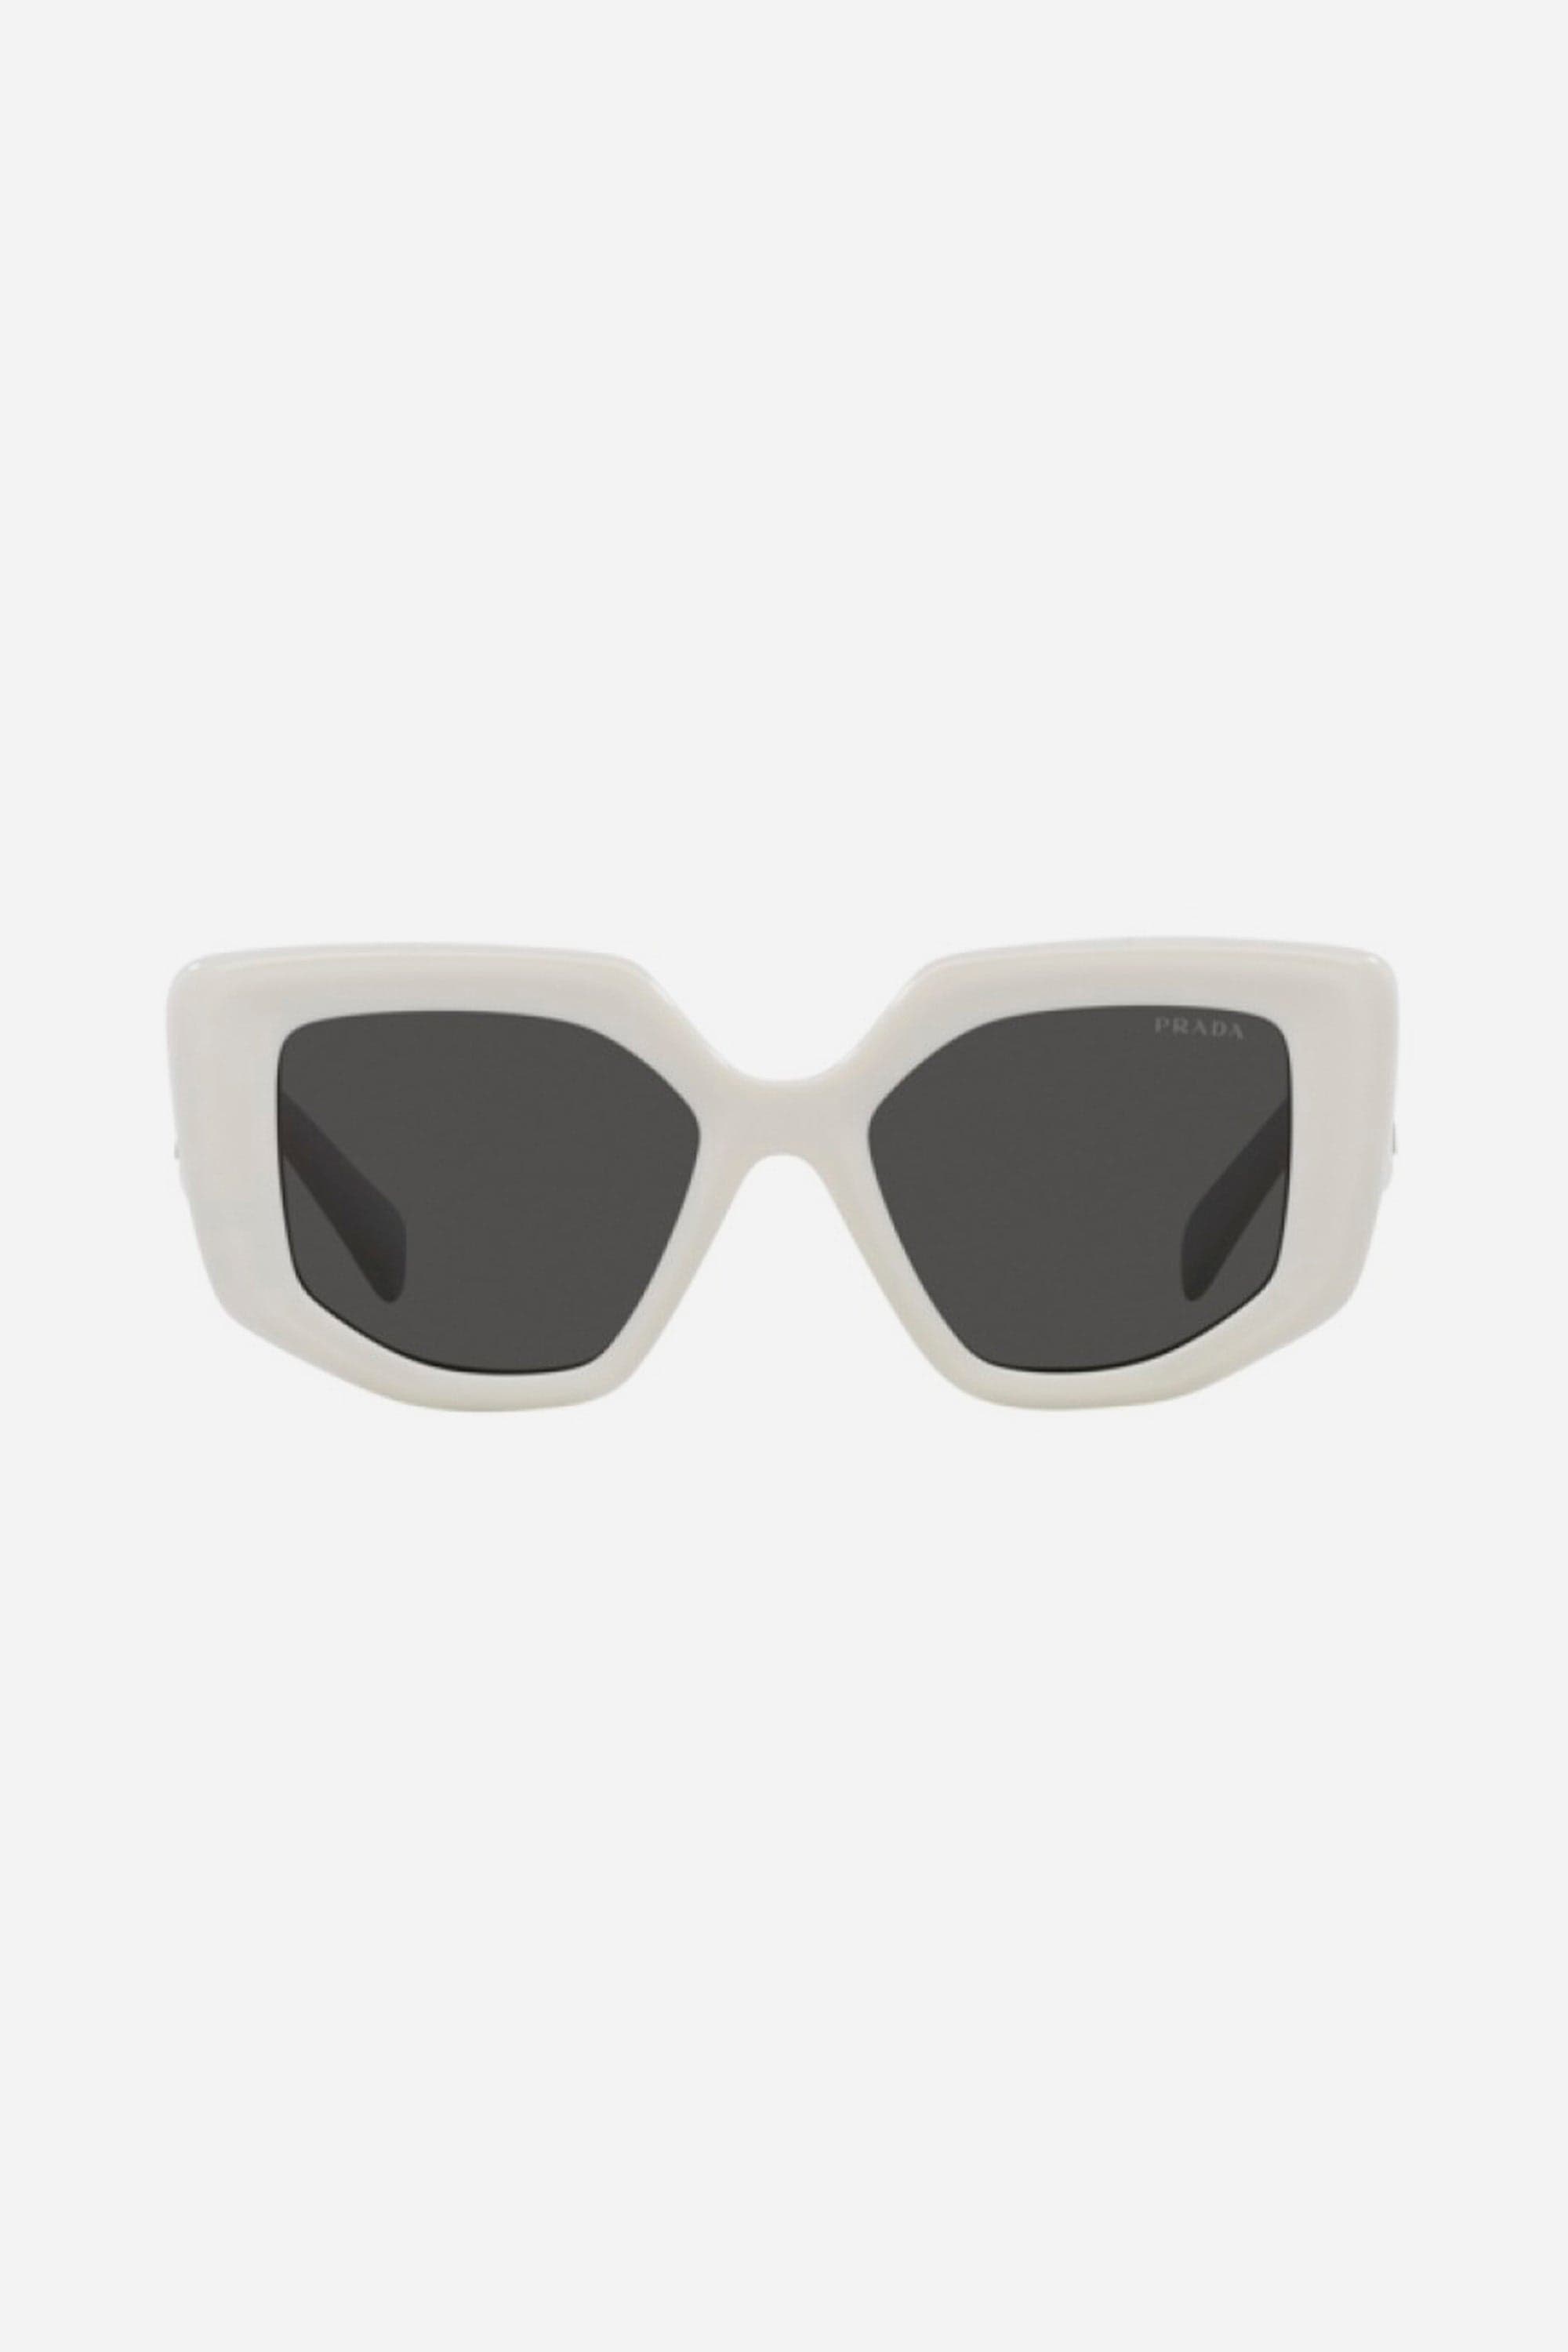 Prada PR14ZS white butterfly shape sunglasses - Eyewear Club